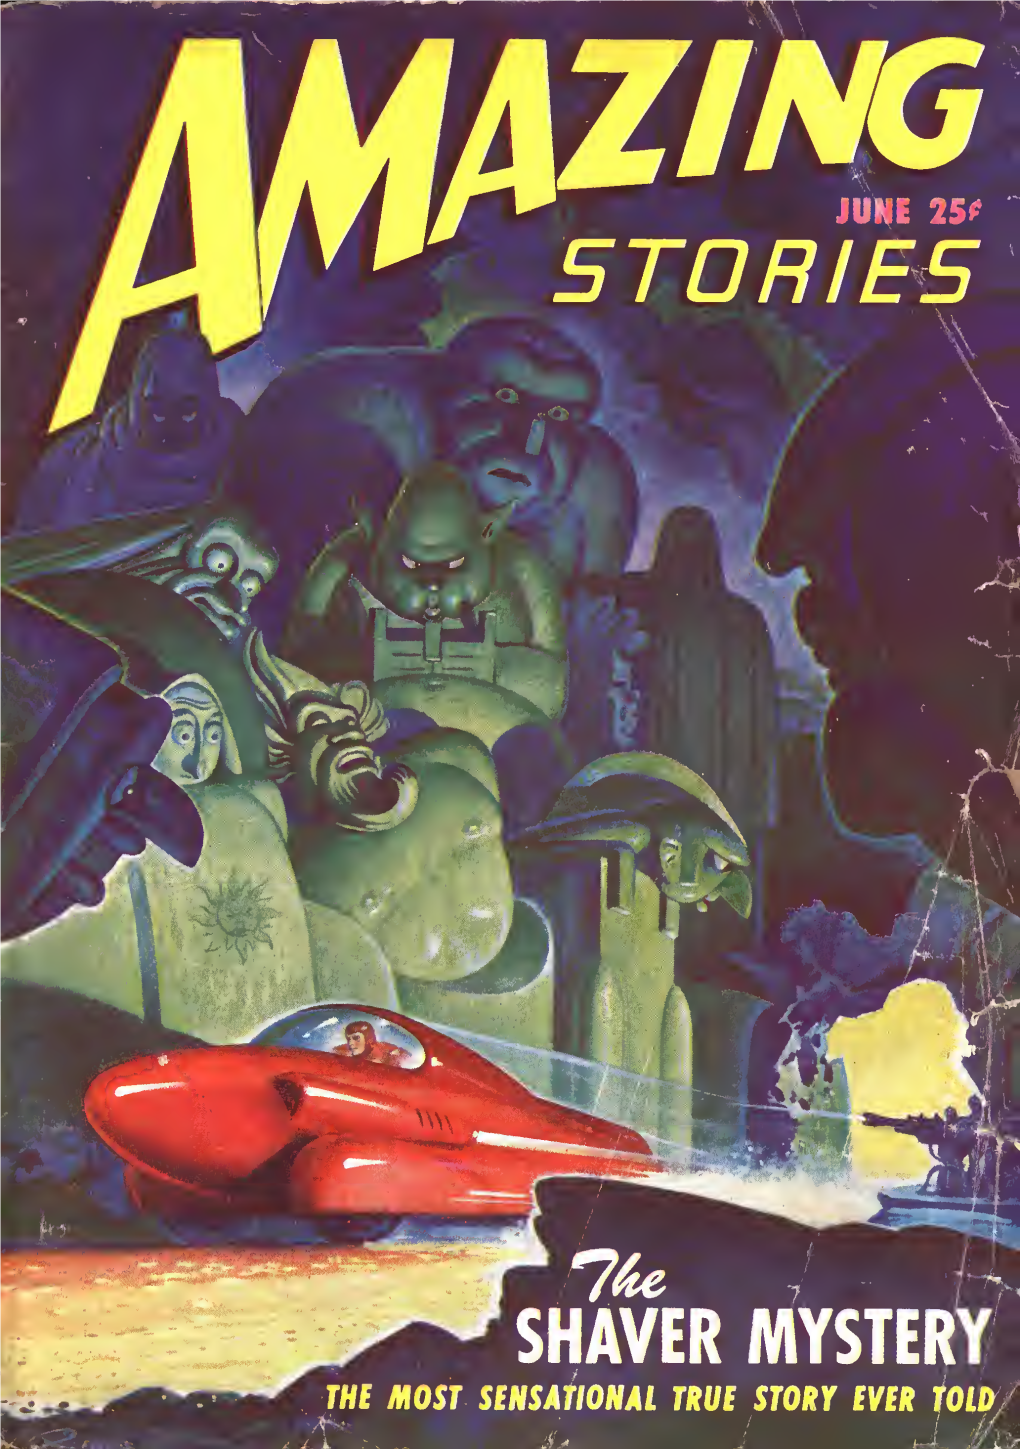 Amazing Stories Volume 21 Number 06